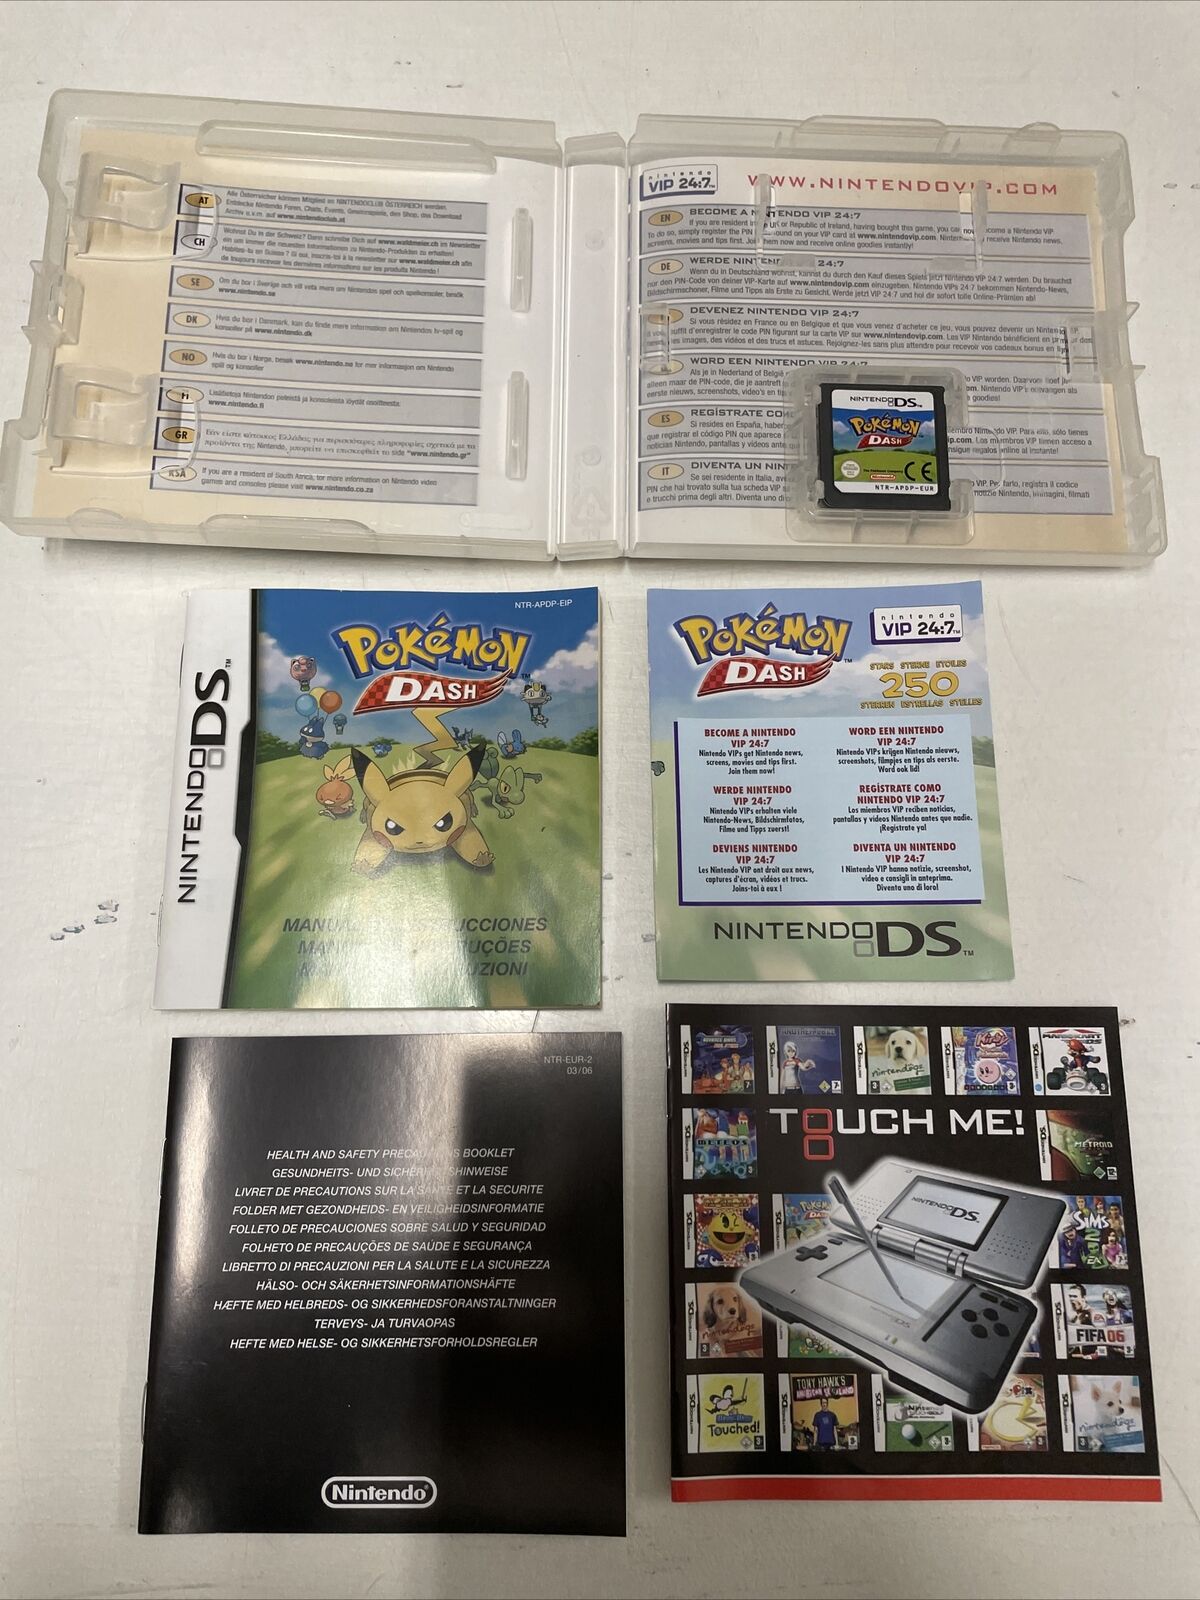 Nintendo-DS2DS3DS-Videogioco-Pokemon-Dash-Pal-Ita-Raro-144799868108